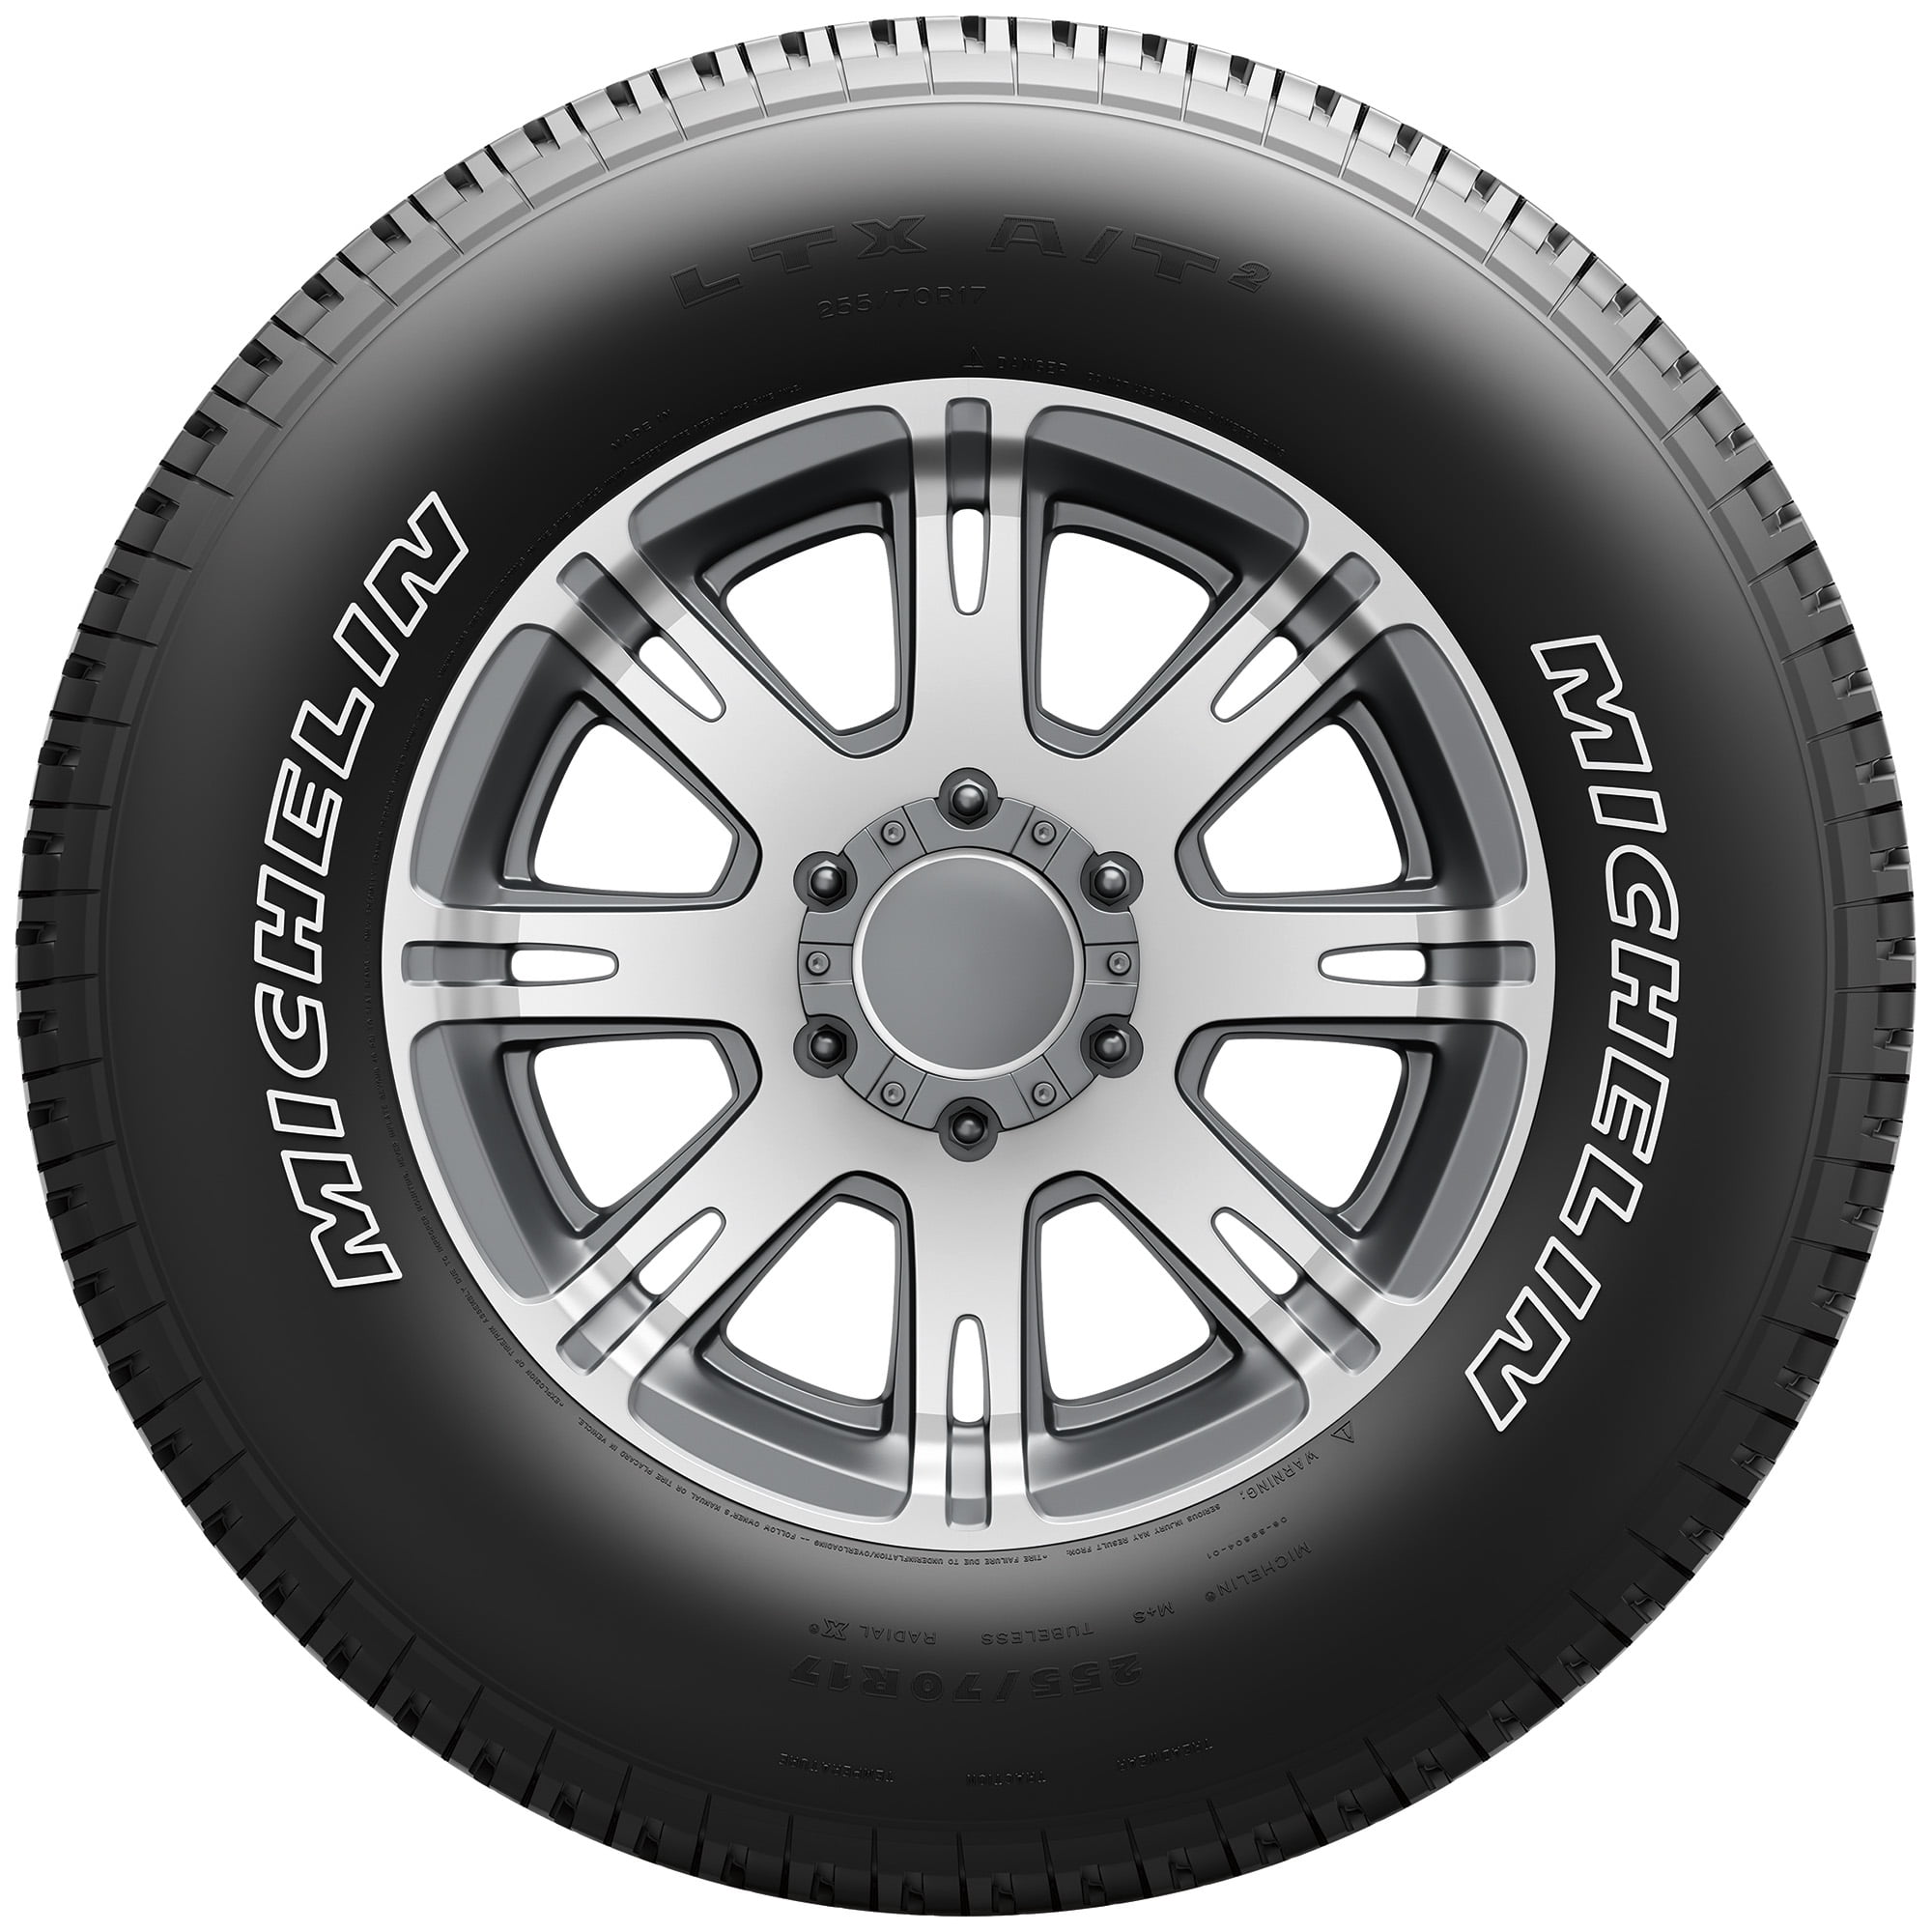 Michelin LTX A/T2 All Terrain LT285/55R20 122R E Light Truck Tire -  